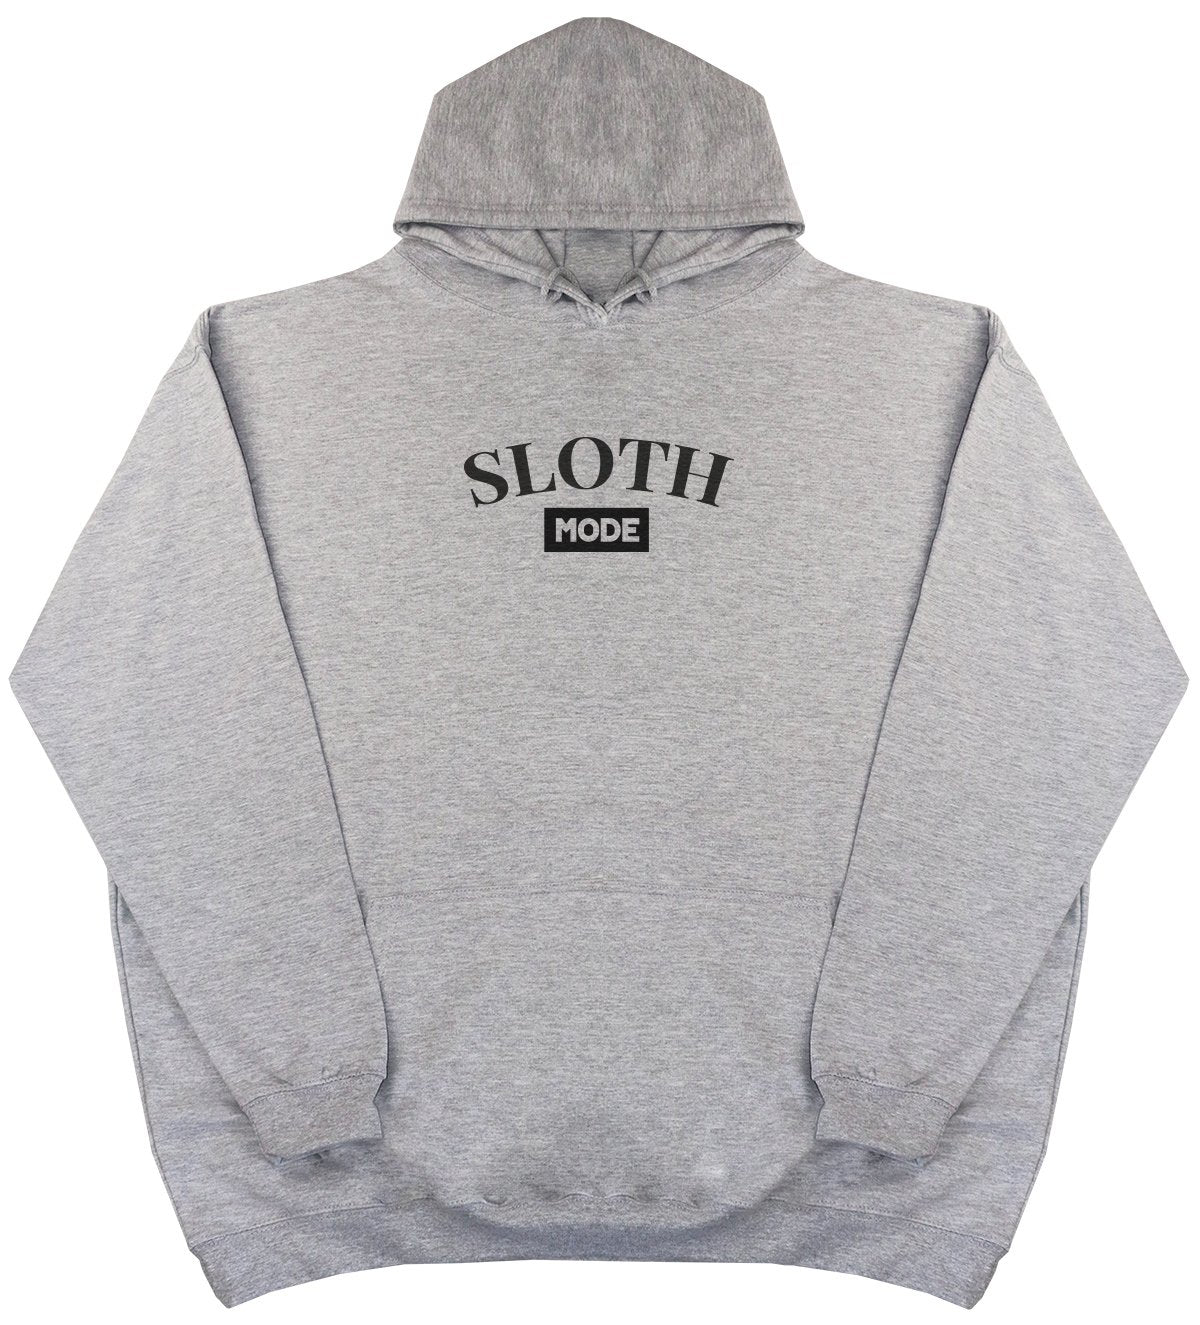 Sloth Mode - New Style - Huge Size - Oversized Comfy Hoody